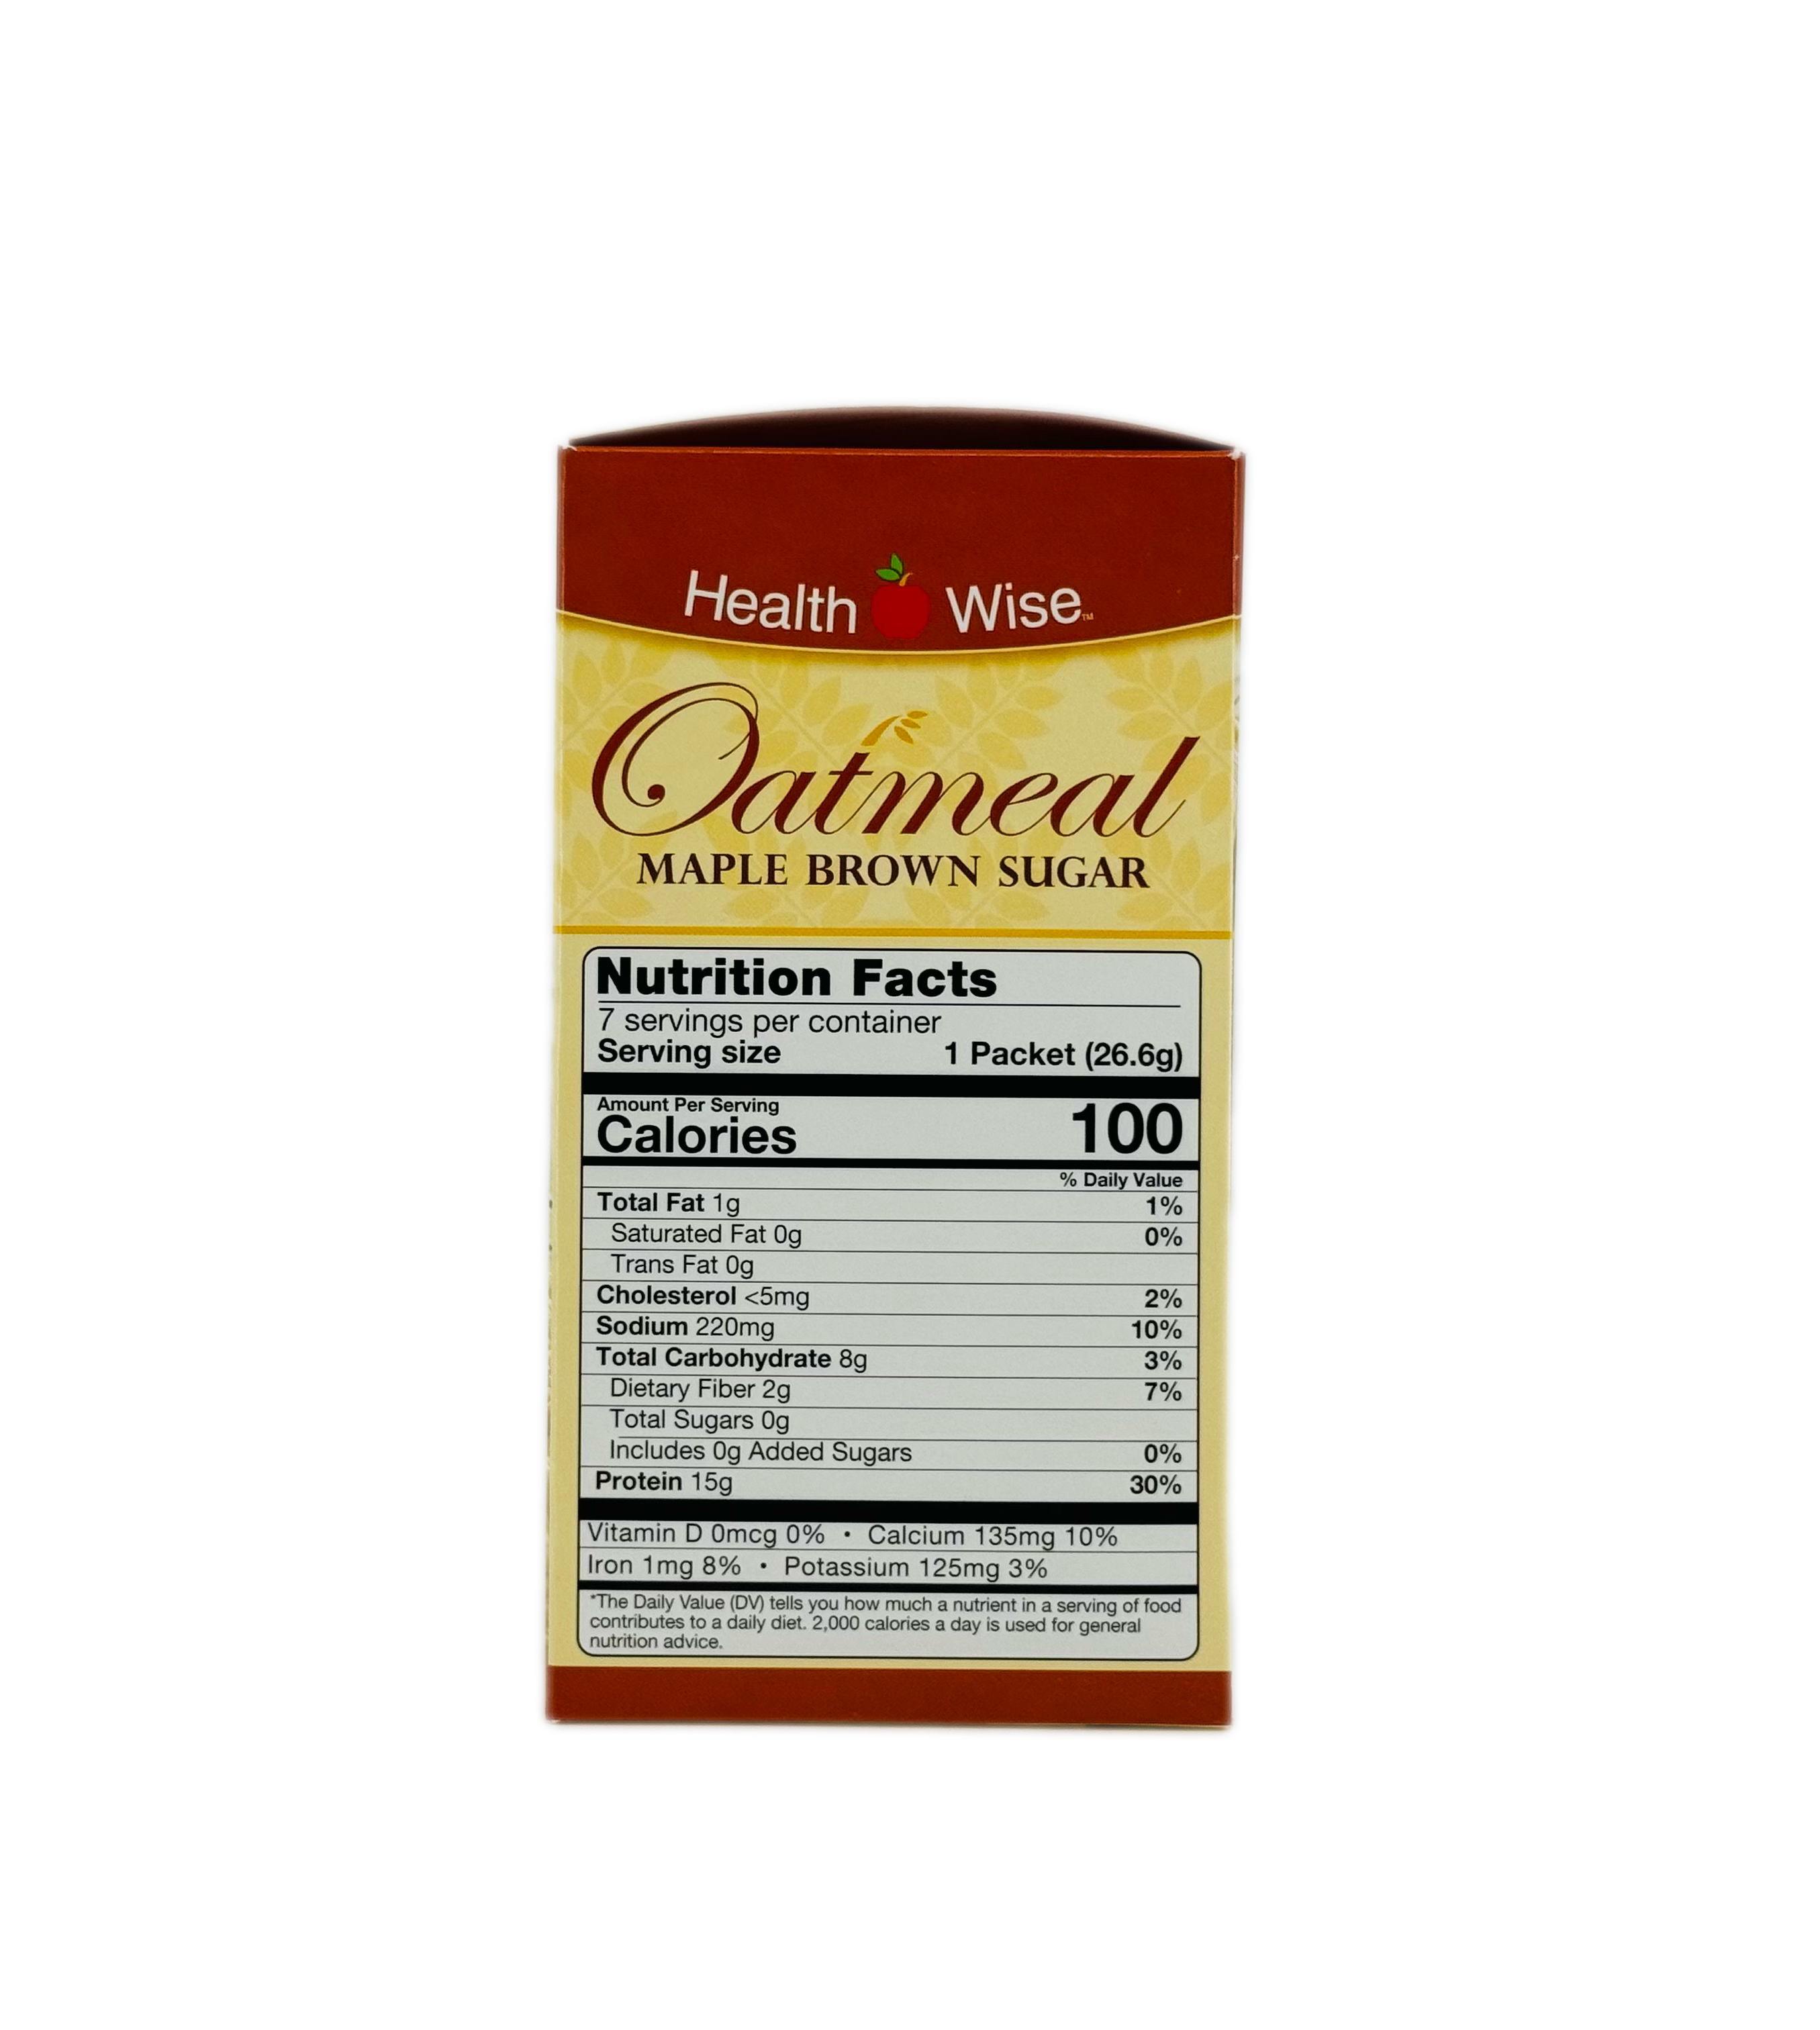 Healthwise Maple Brown Sugar Oatmeal